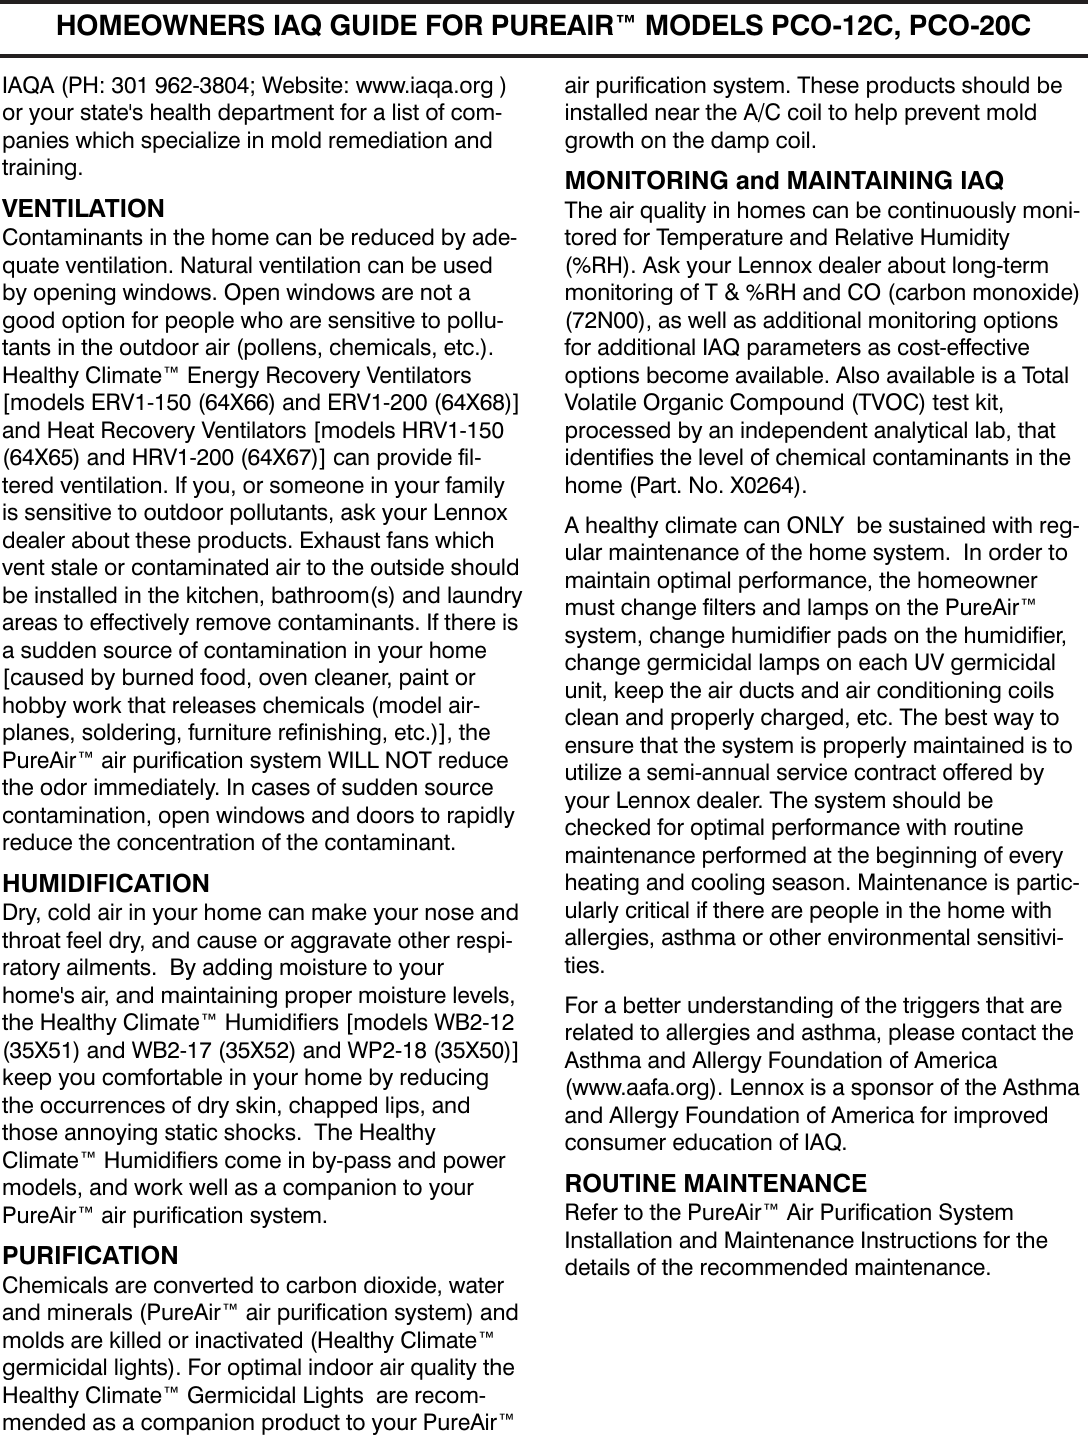 Page 2 of 4 - Lennox-International-Inc Lennox-International-Inc-Lennox-International-Inc-Air-Cleaner-Pco-12C-Users-Manual- PureAir Air Purification System Homeowners Manual  Lennox-international-inc-lennox-international-inc-air-cleaner-pco-12c-users-manual